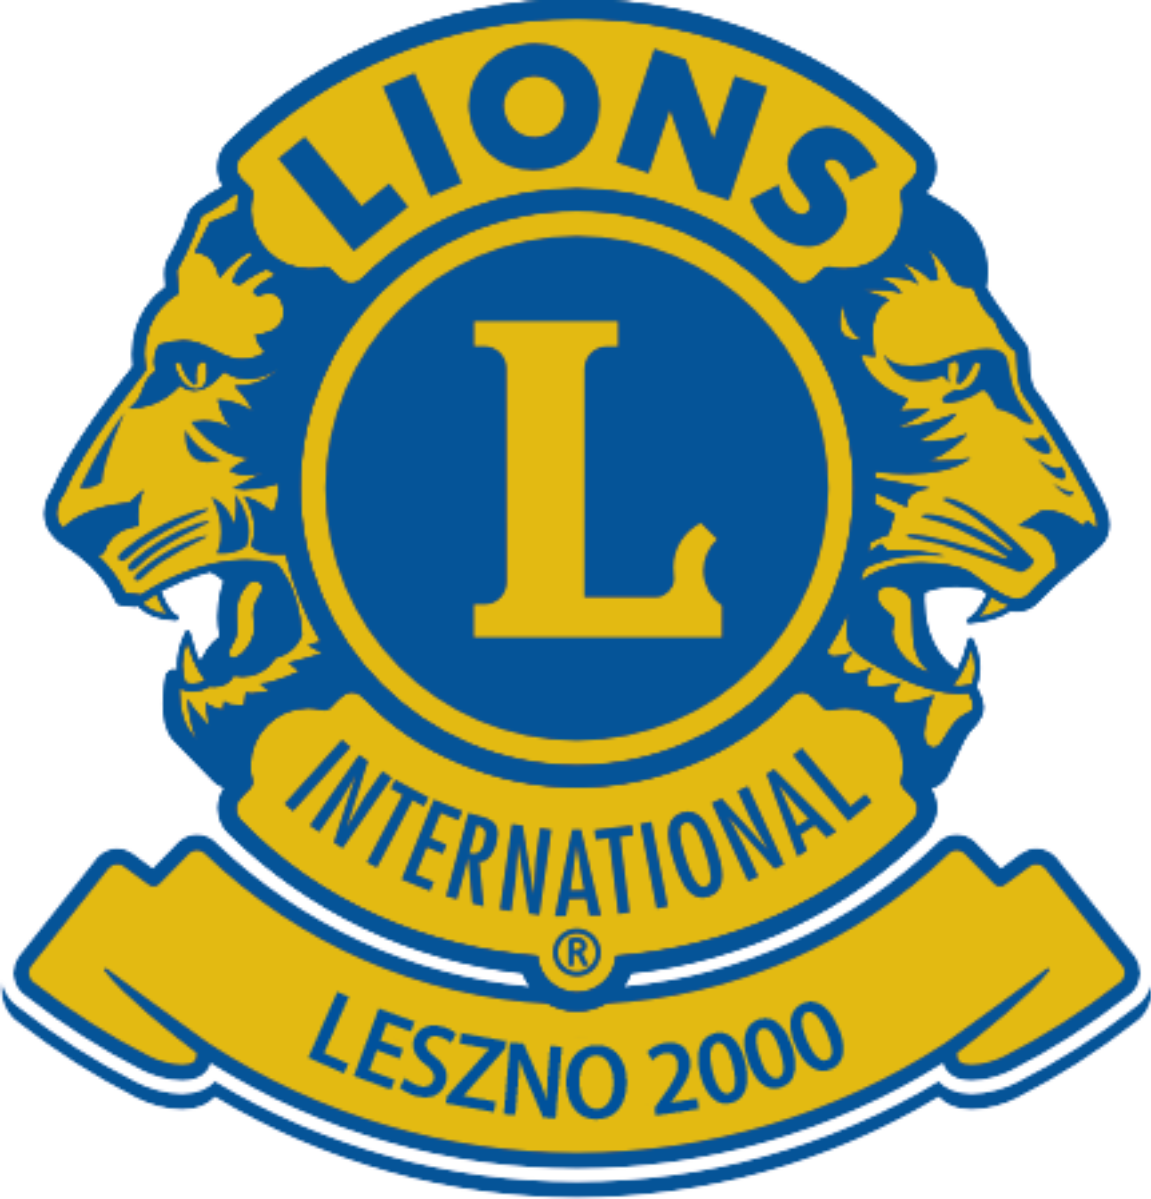 Lions Club Leszno 2000